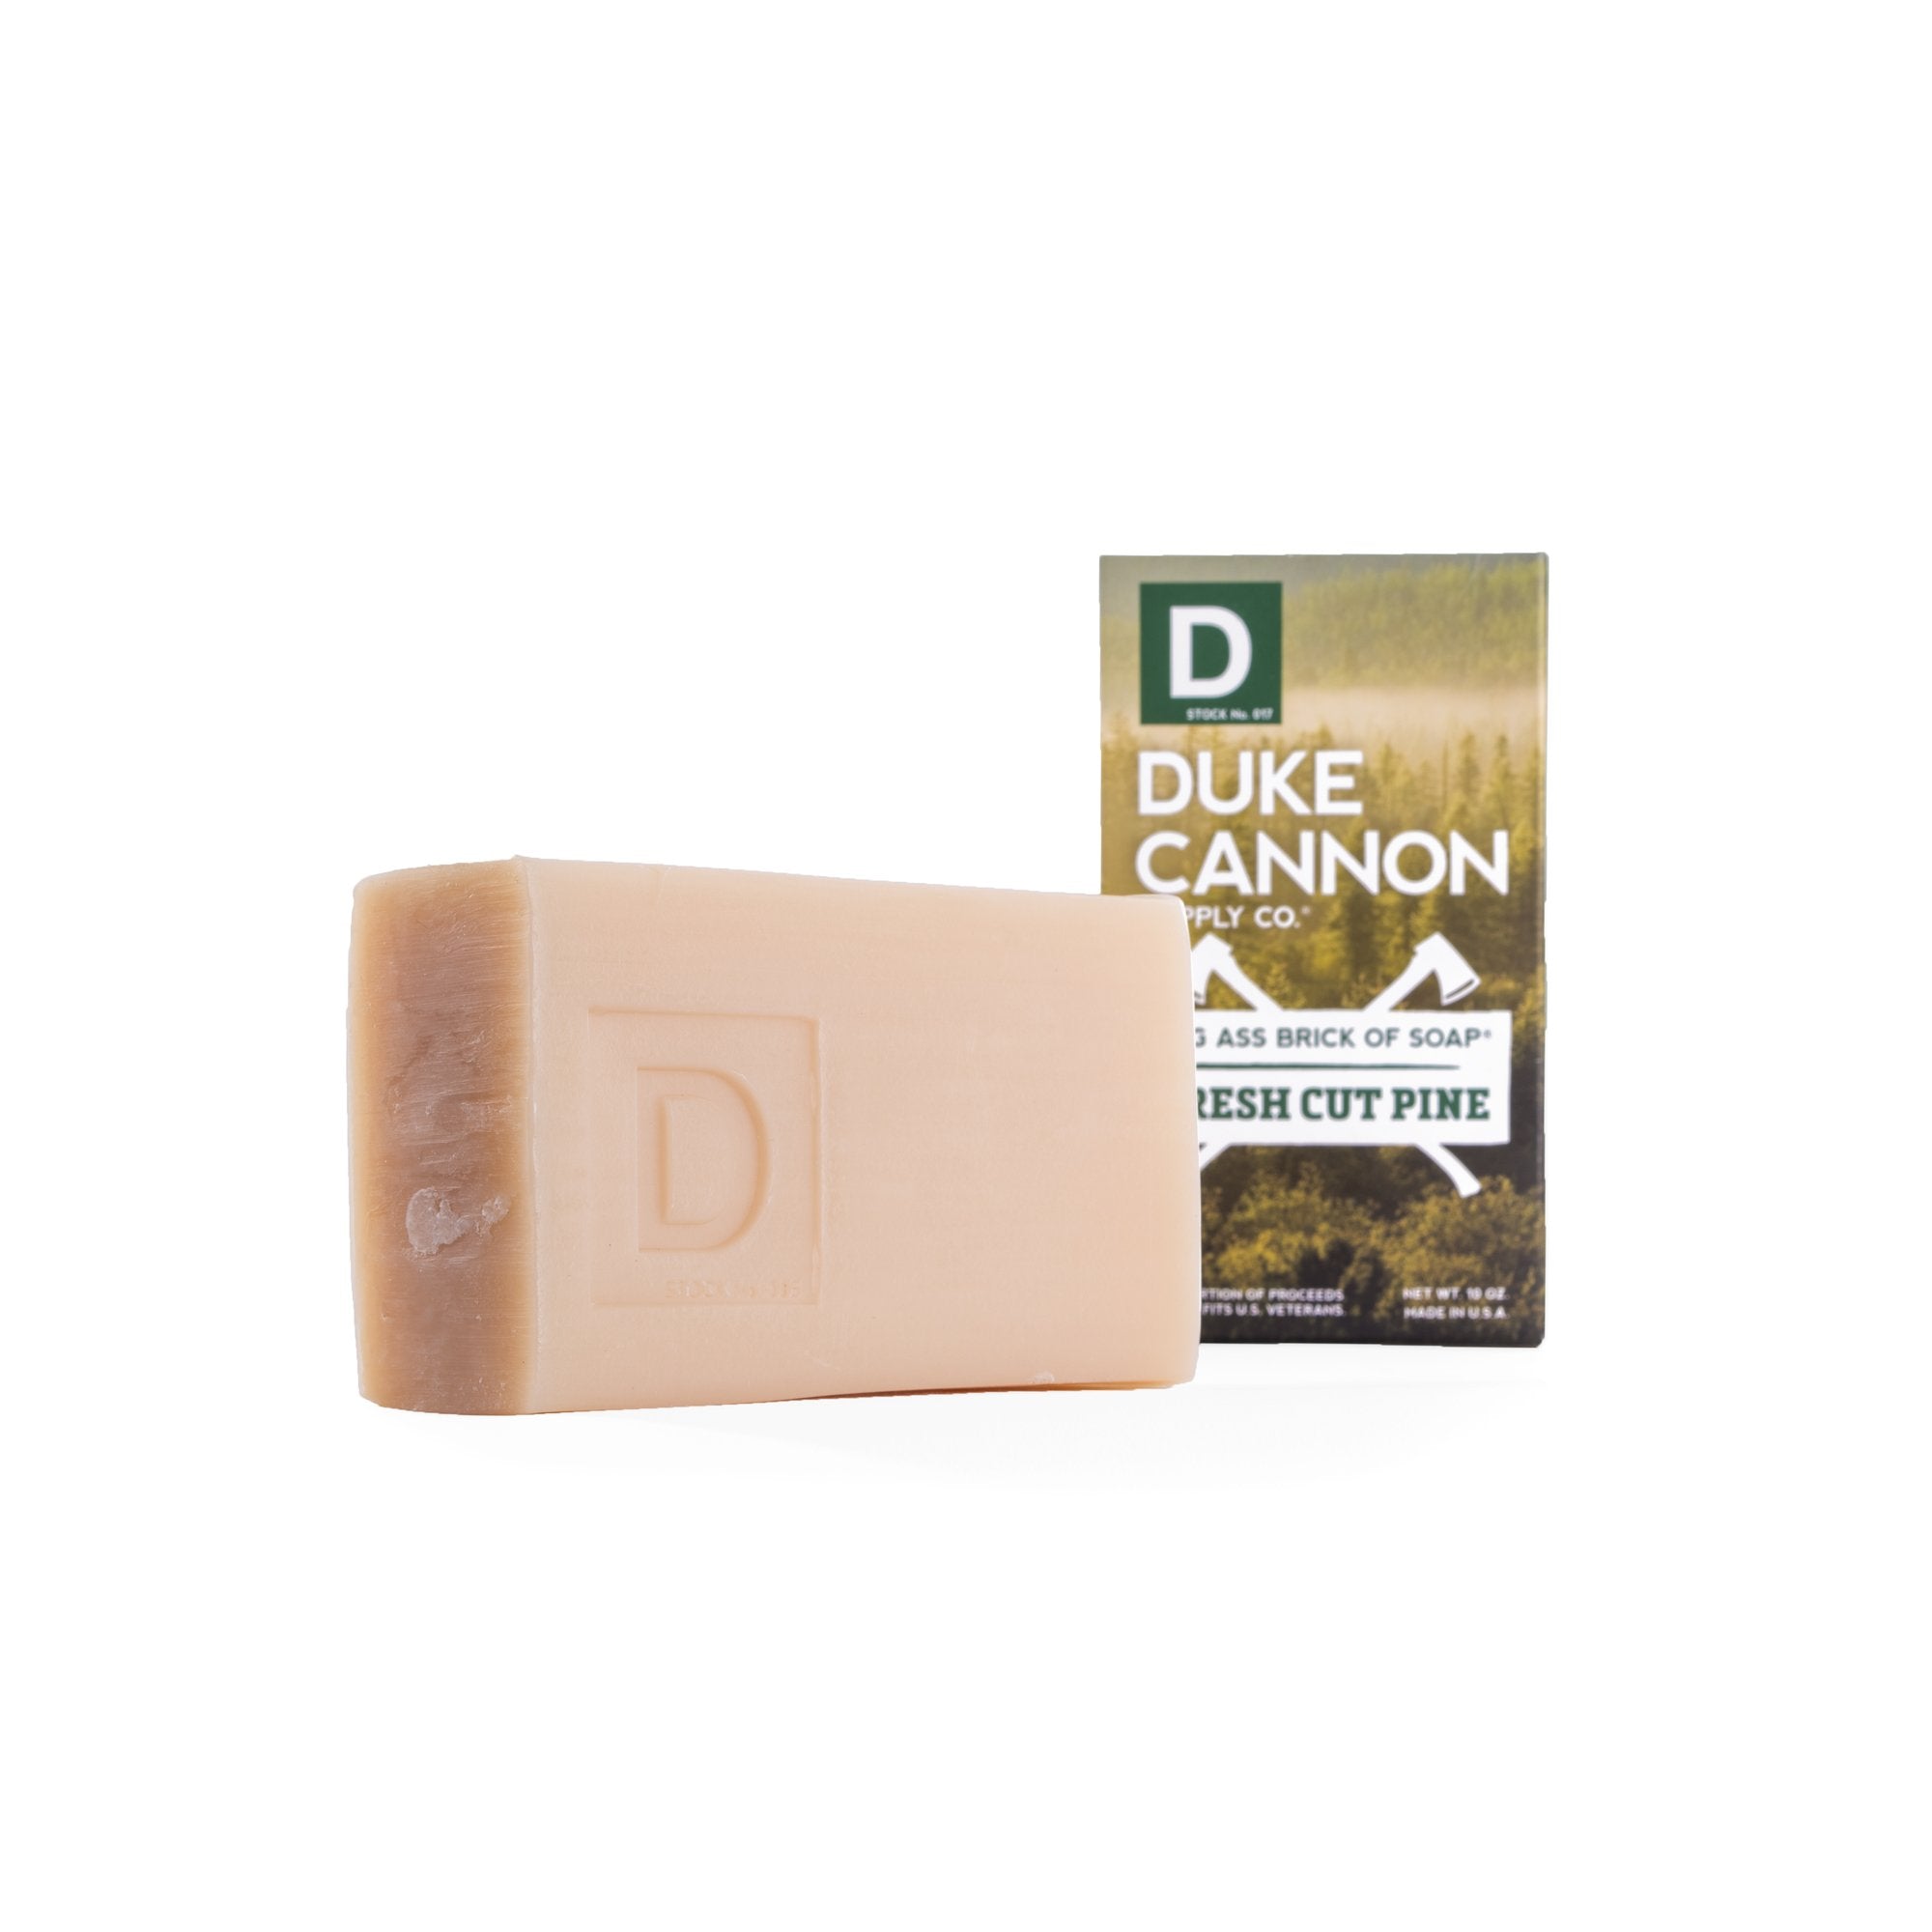 Duke Cannon Big Ass Brick of Soap - Fresh Cut Pine    